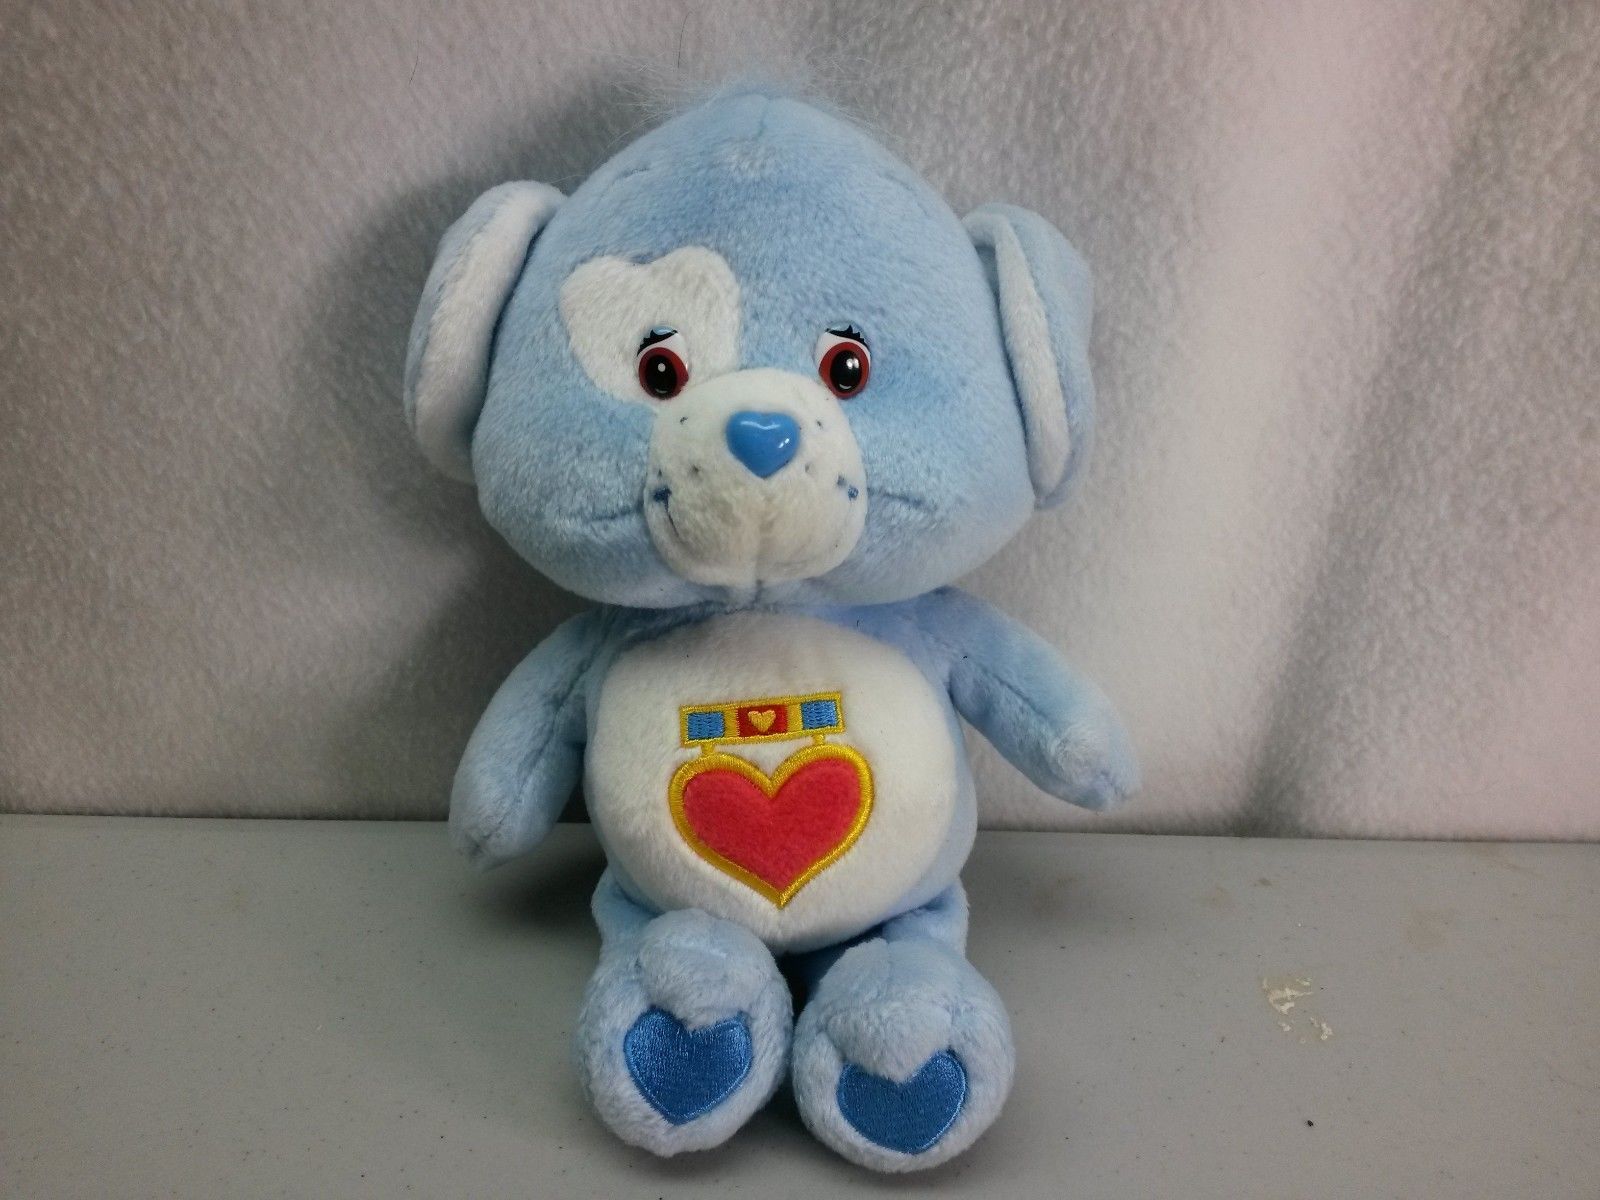 Care Bears Cousin Loyal Heart Dog 8 inch plush 2003 Blue Puppy Bean Bag Toy